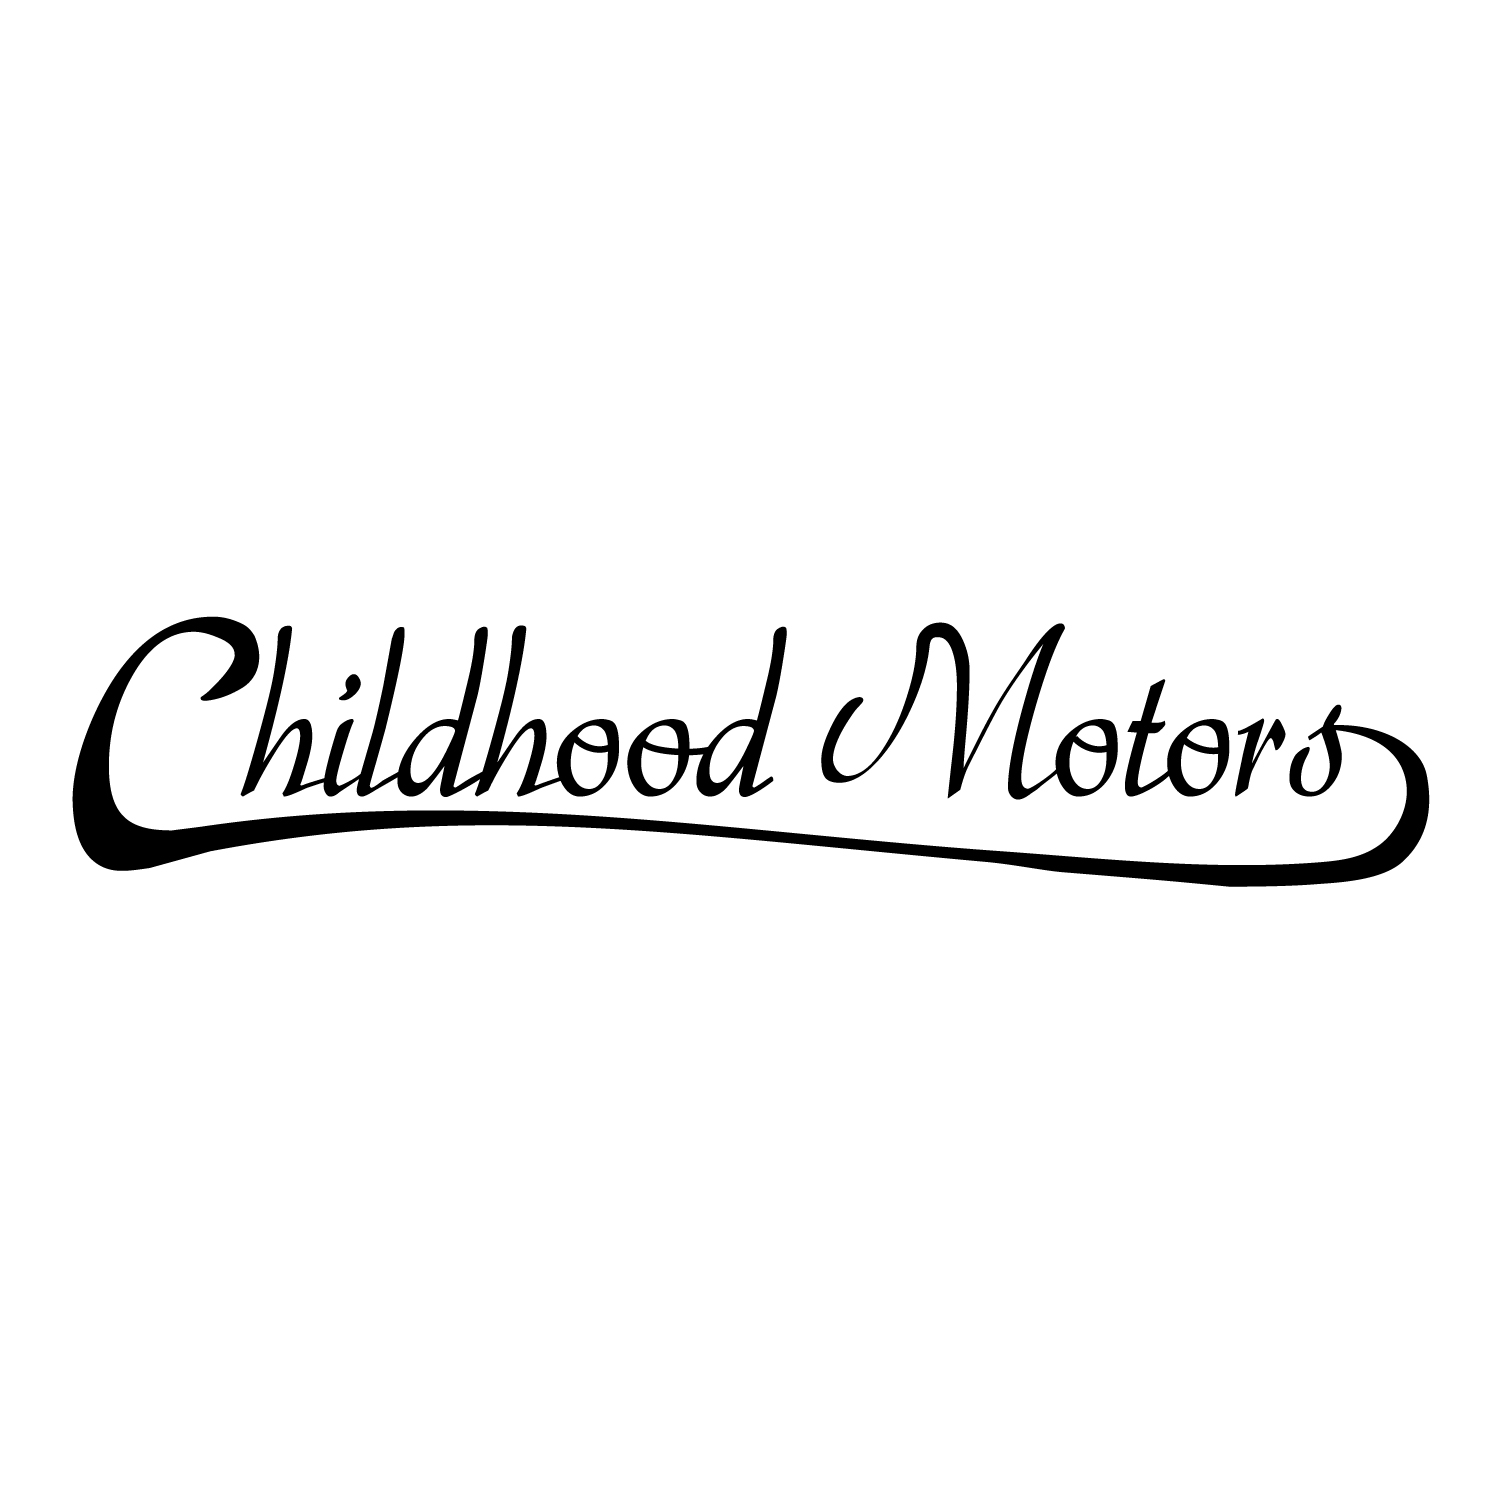 Childhood Motors(6)